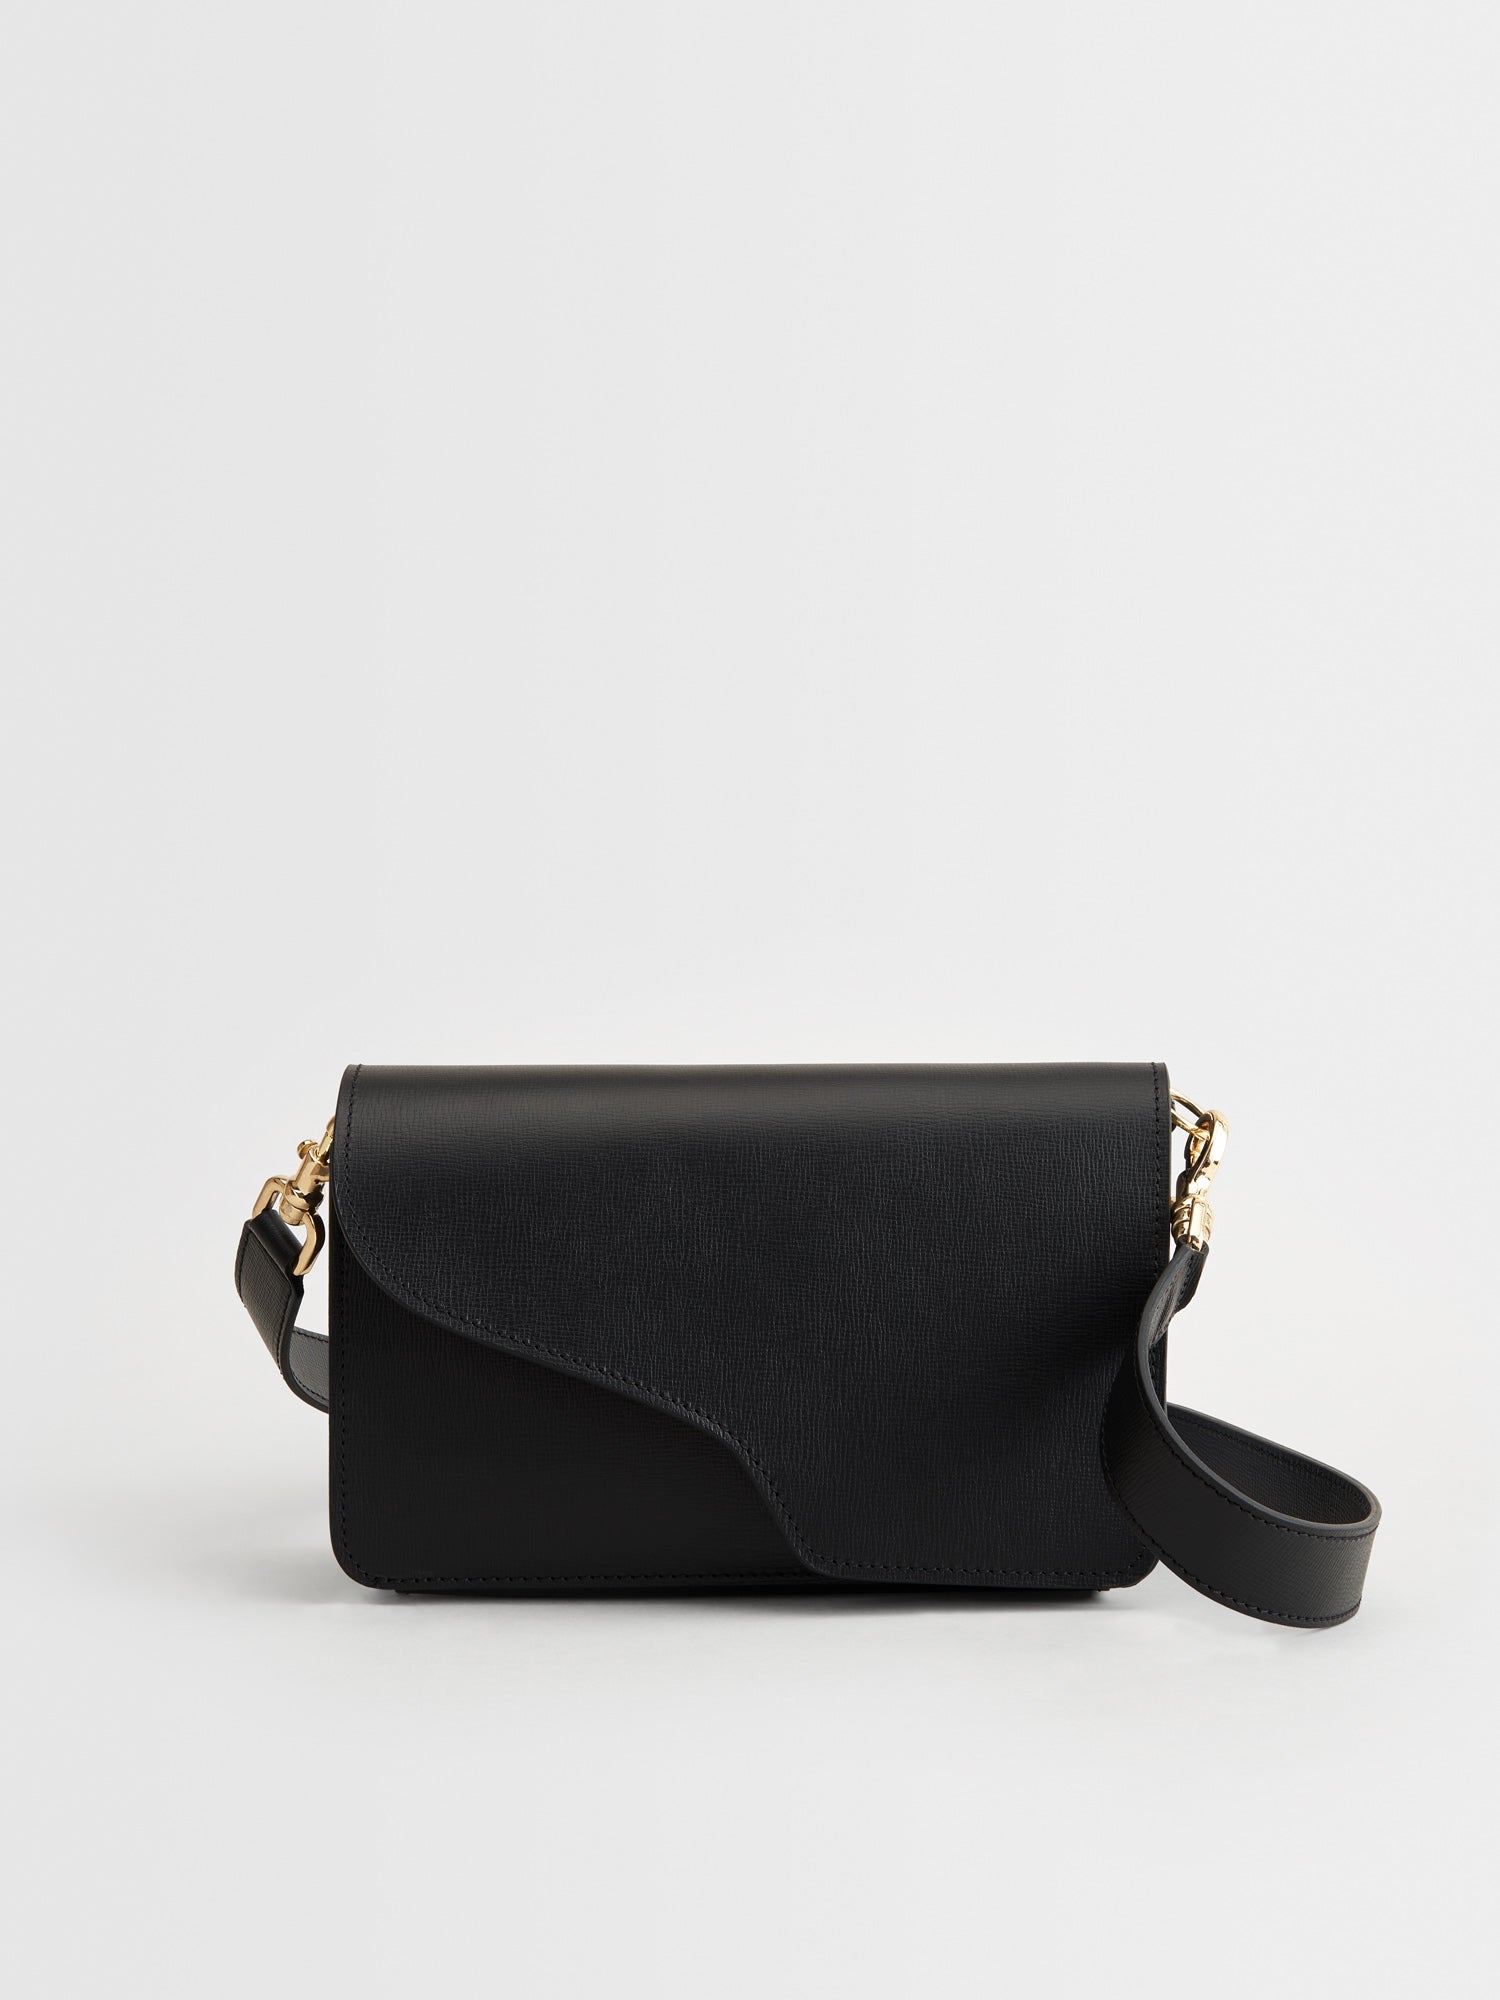 Black Saffiano Leather And Leather Shoulder Bag